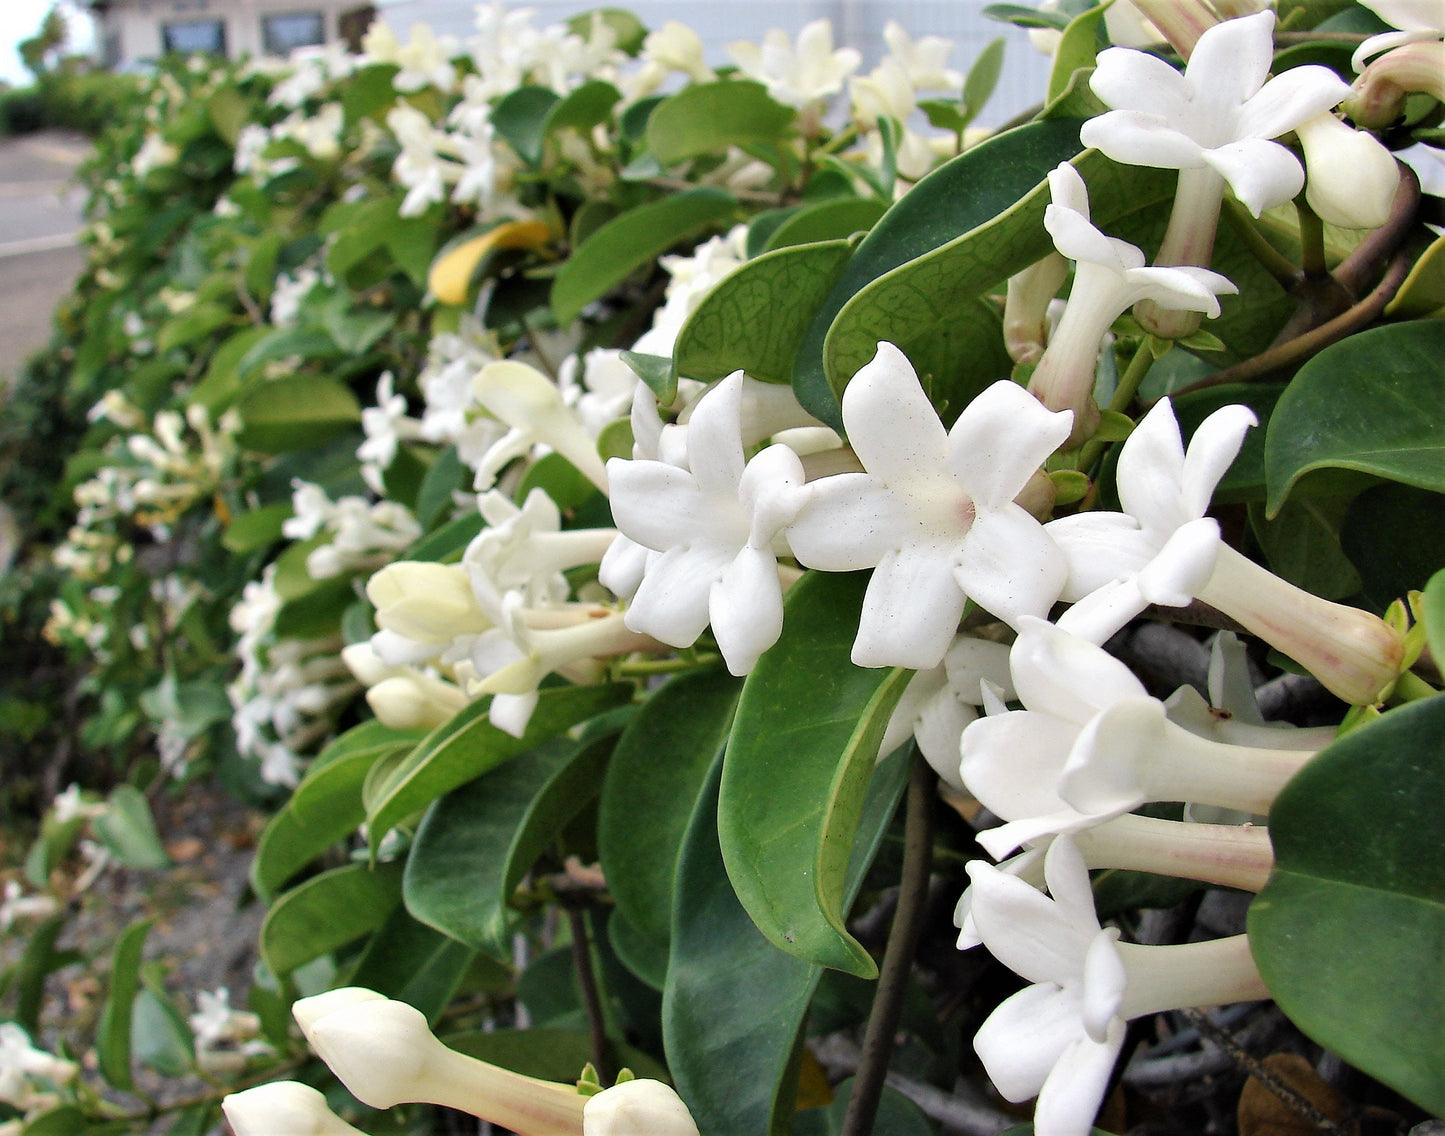 10 MADAGASCAR JASMINE Vine Stephanotis Floribunda Fragrant Houseplant Bridal Wreath White Hawaiian Wedding Flower Seeds